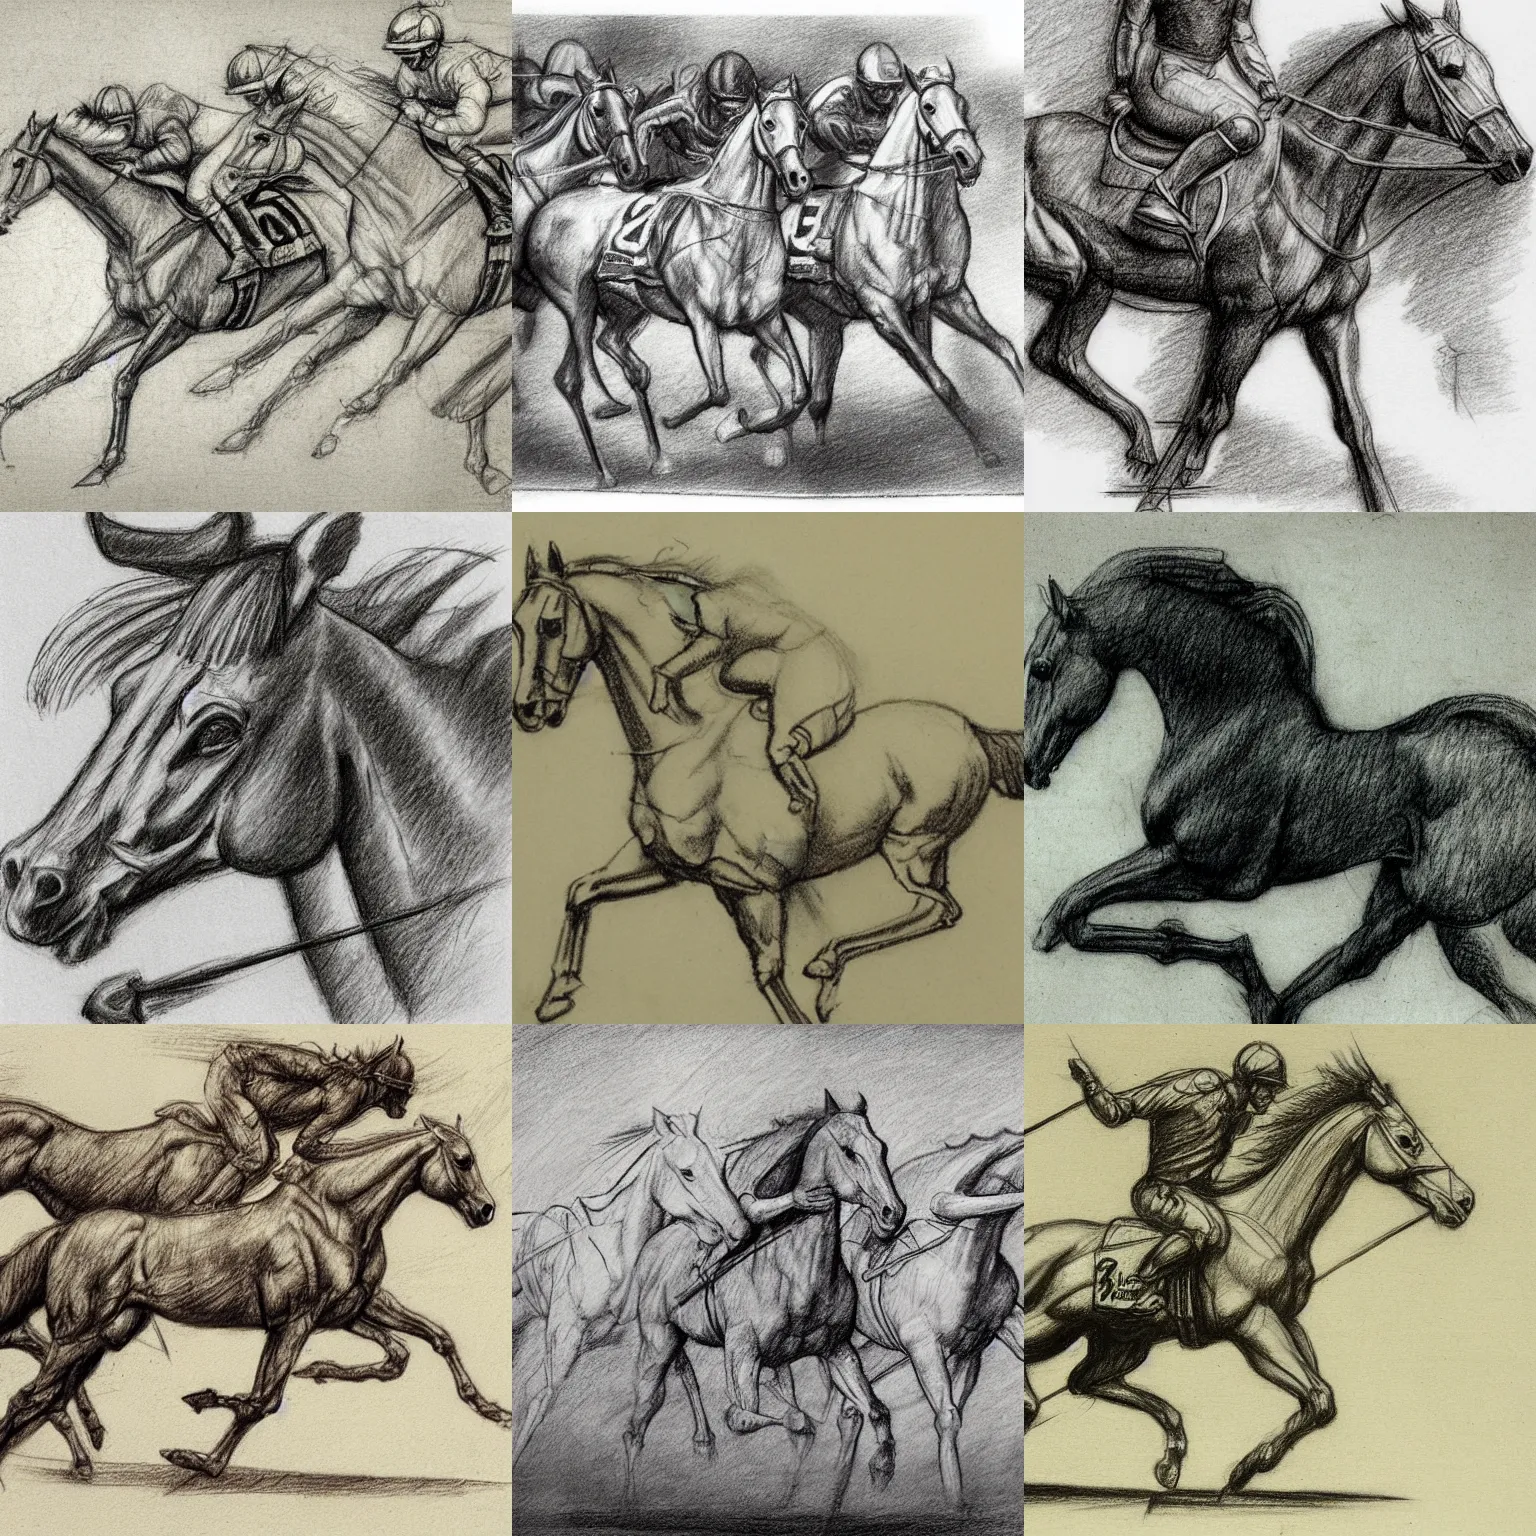 Prompt: horse racing concept art, pencil sketch by Leonardo da Vinci